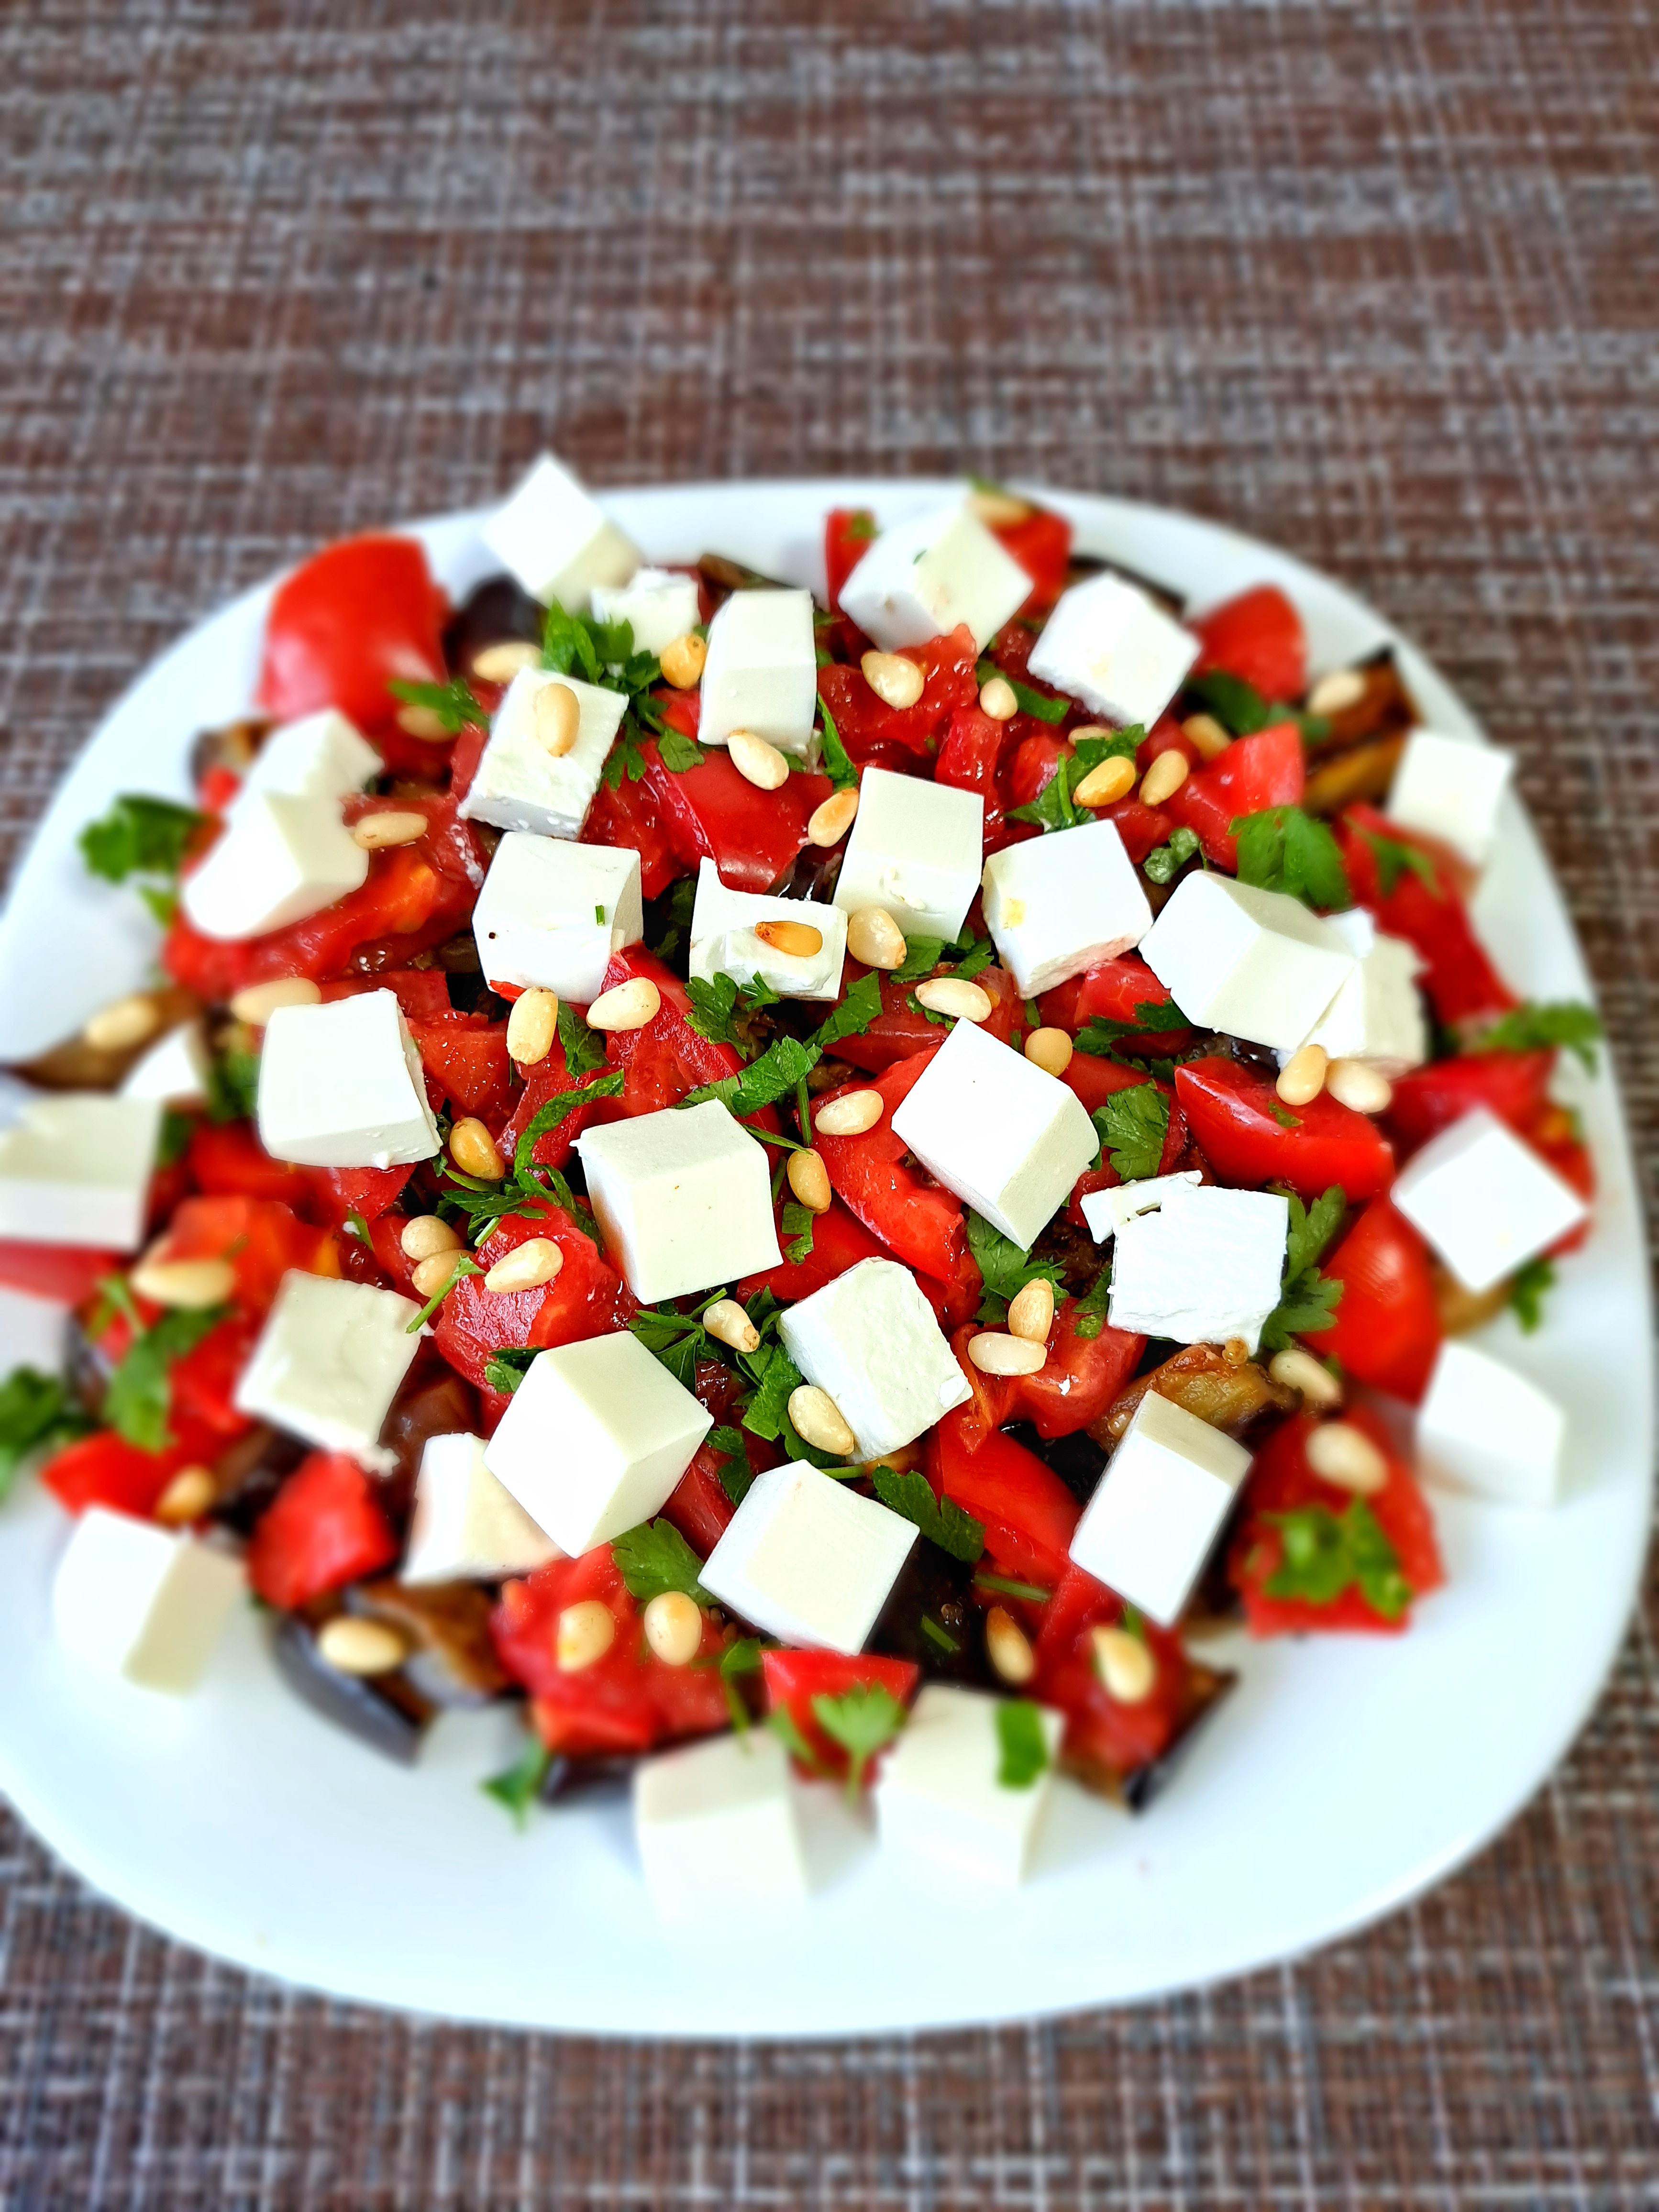 Салат из баклажанов, помидоров и сыра фета